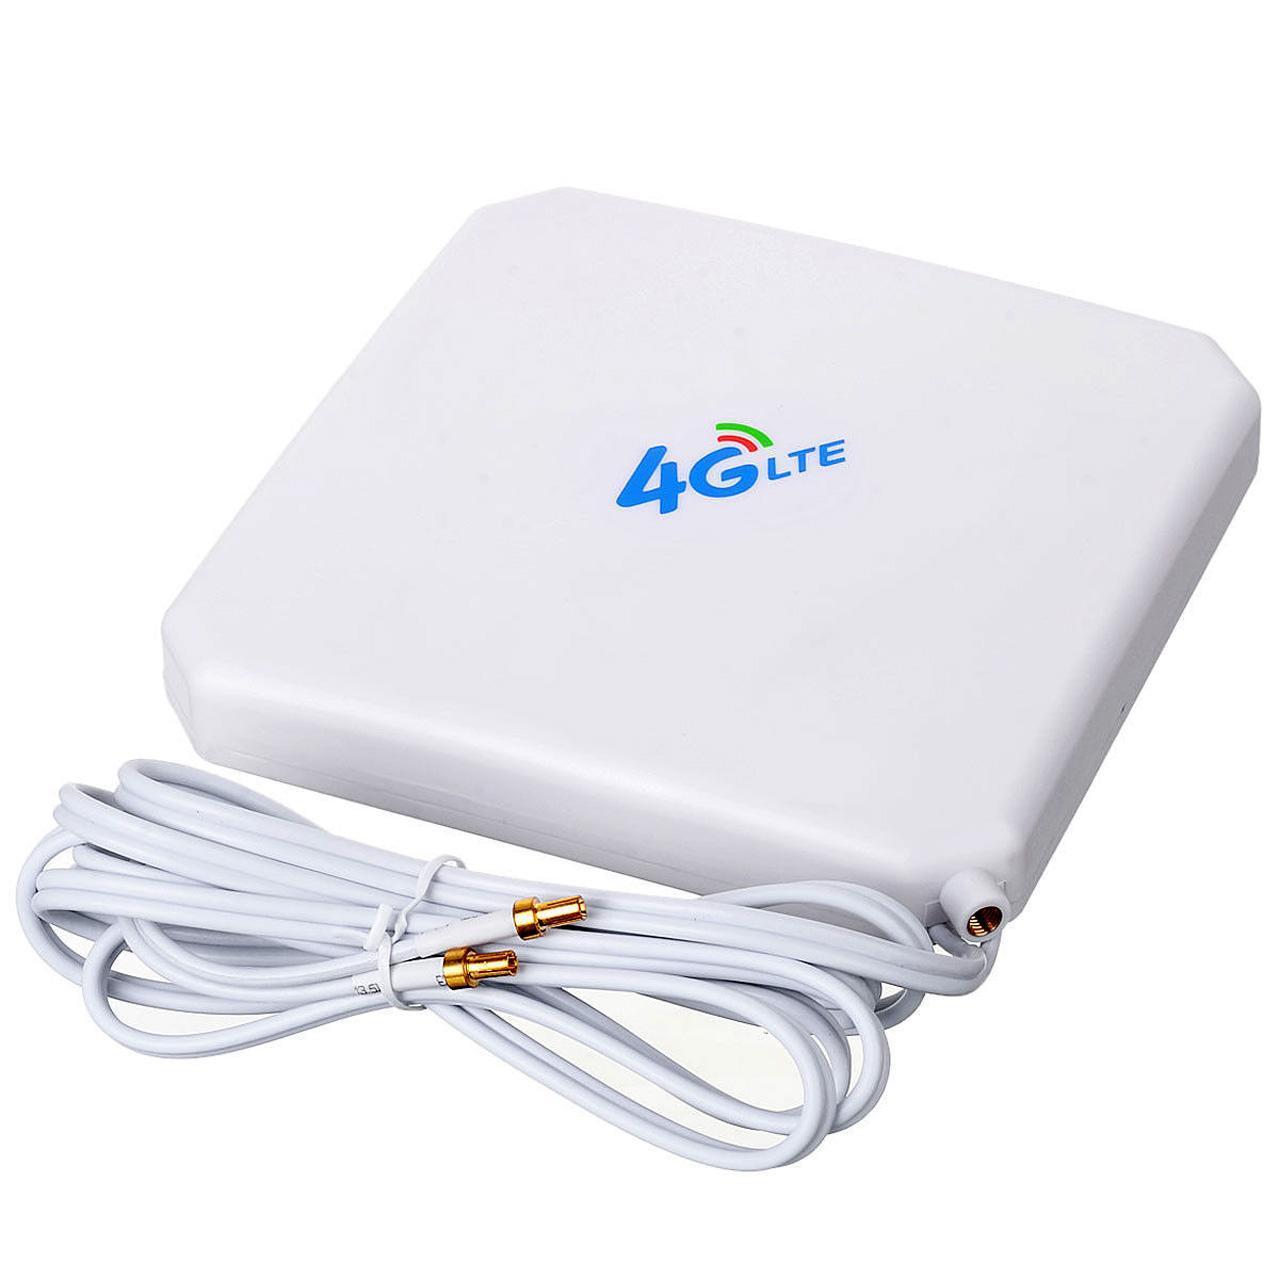 آنتن تقویتی رومیزی 35DB مودم های همراه 4G LTE 

4G LTE Antenna Dual Mimo 35dBi High Gain Network Ethernet Outdoor Antenna